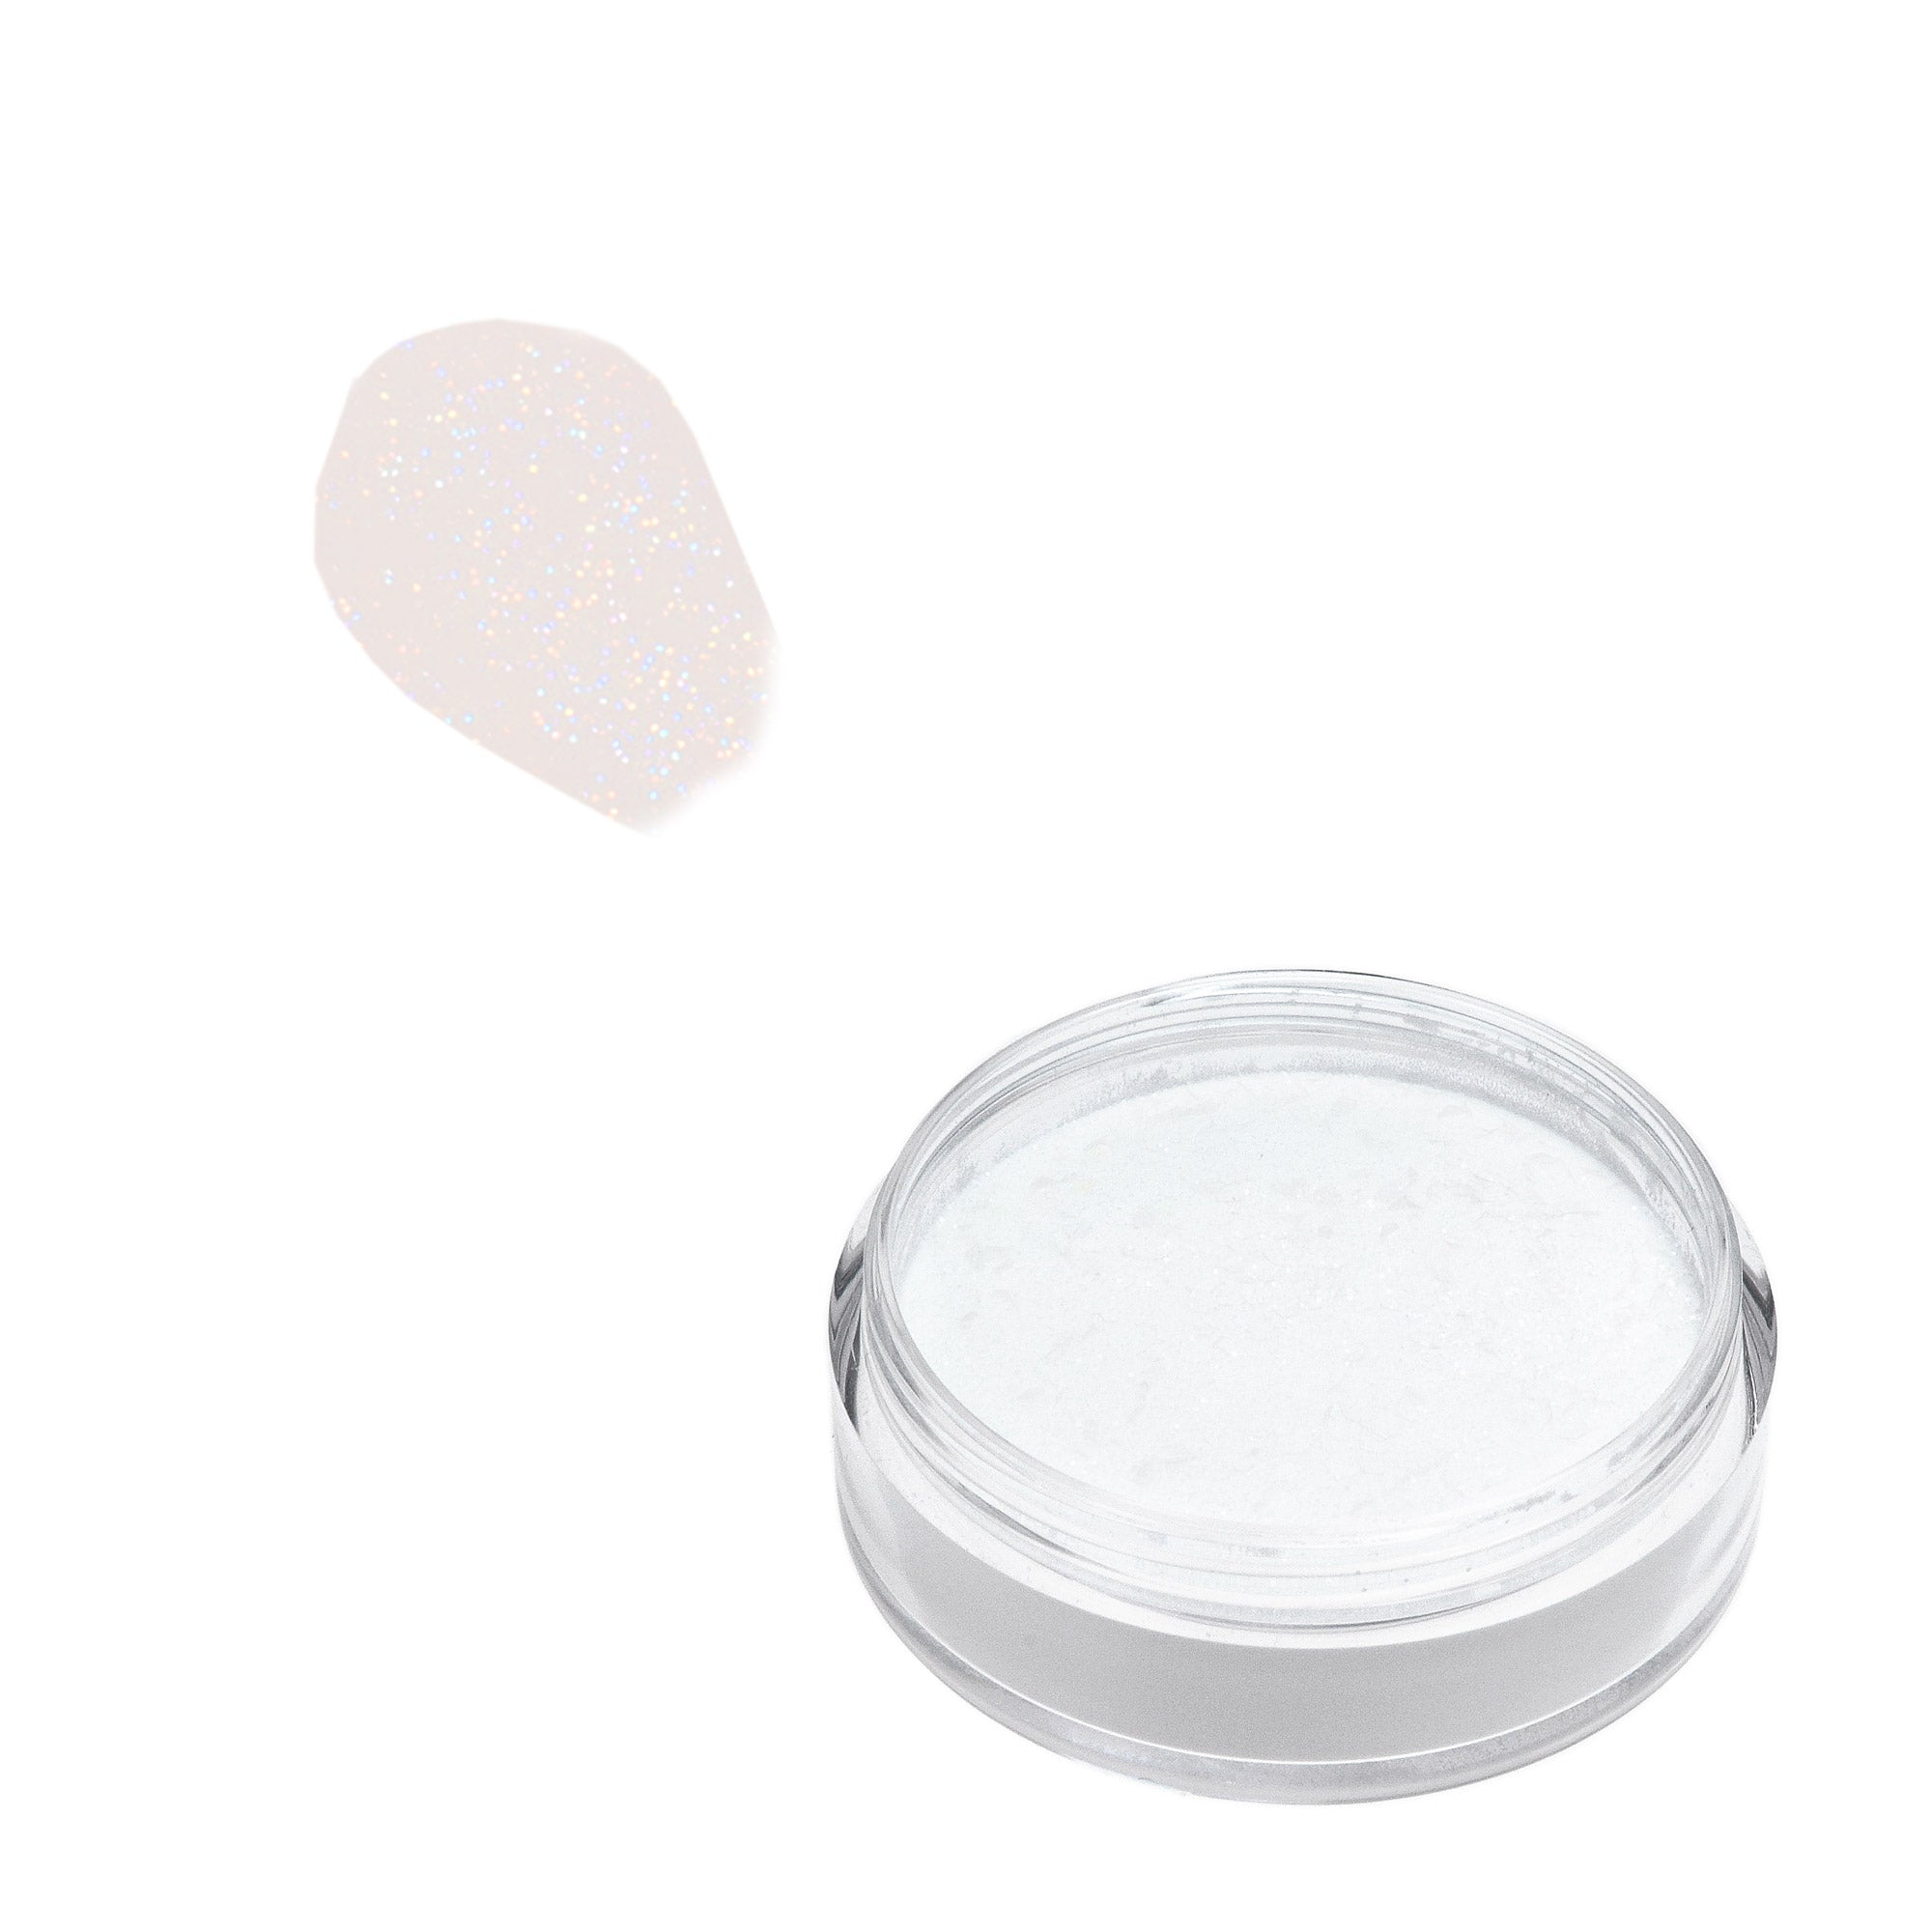 Acrylic Powder 10 g. - White Glitter